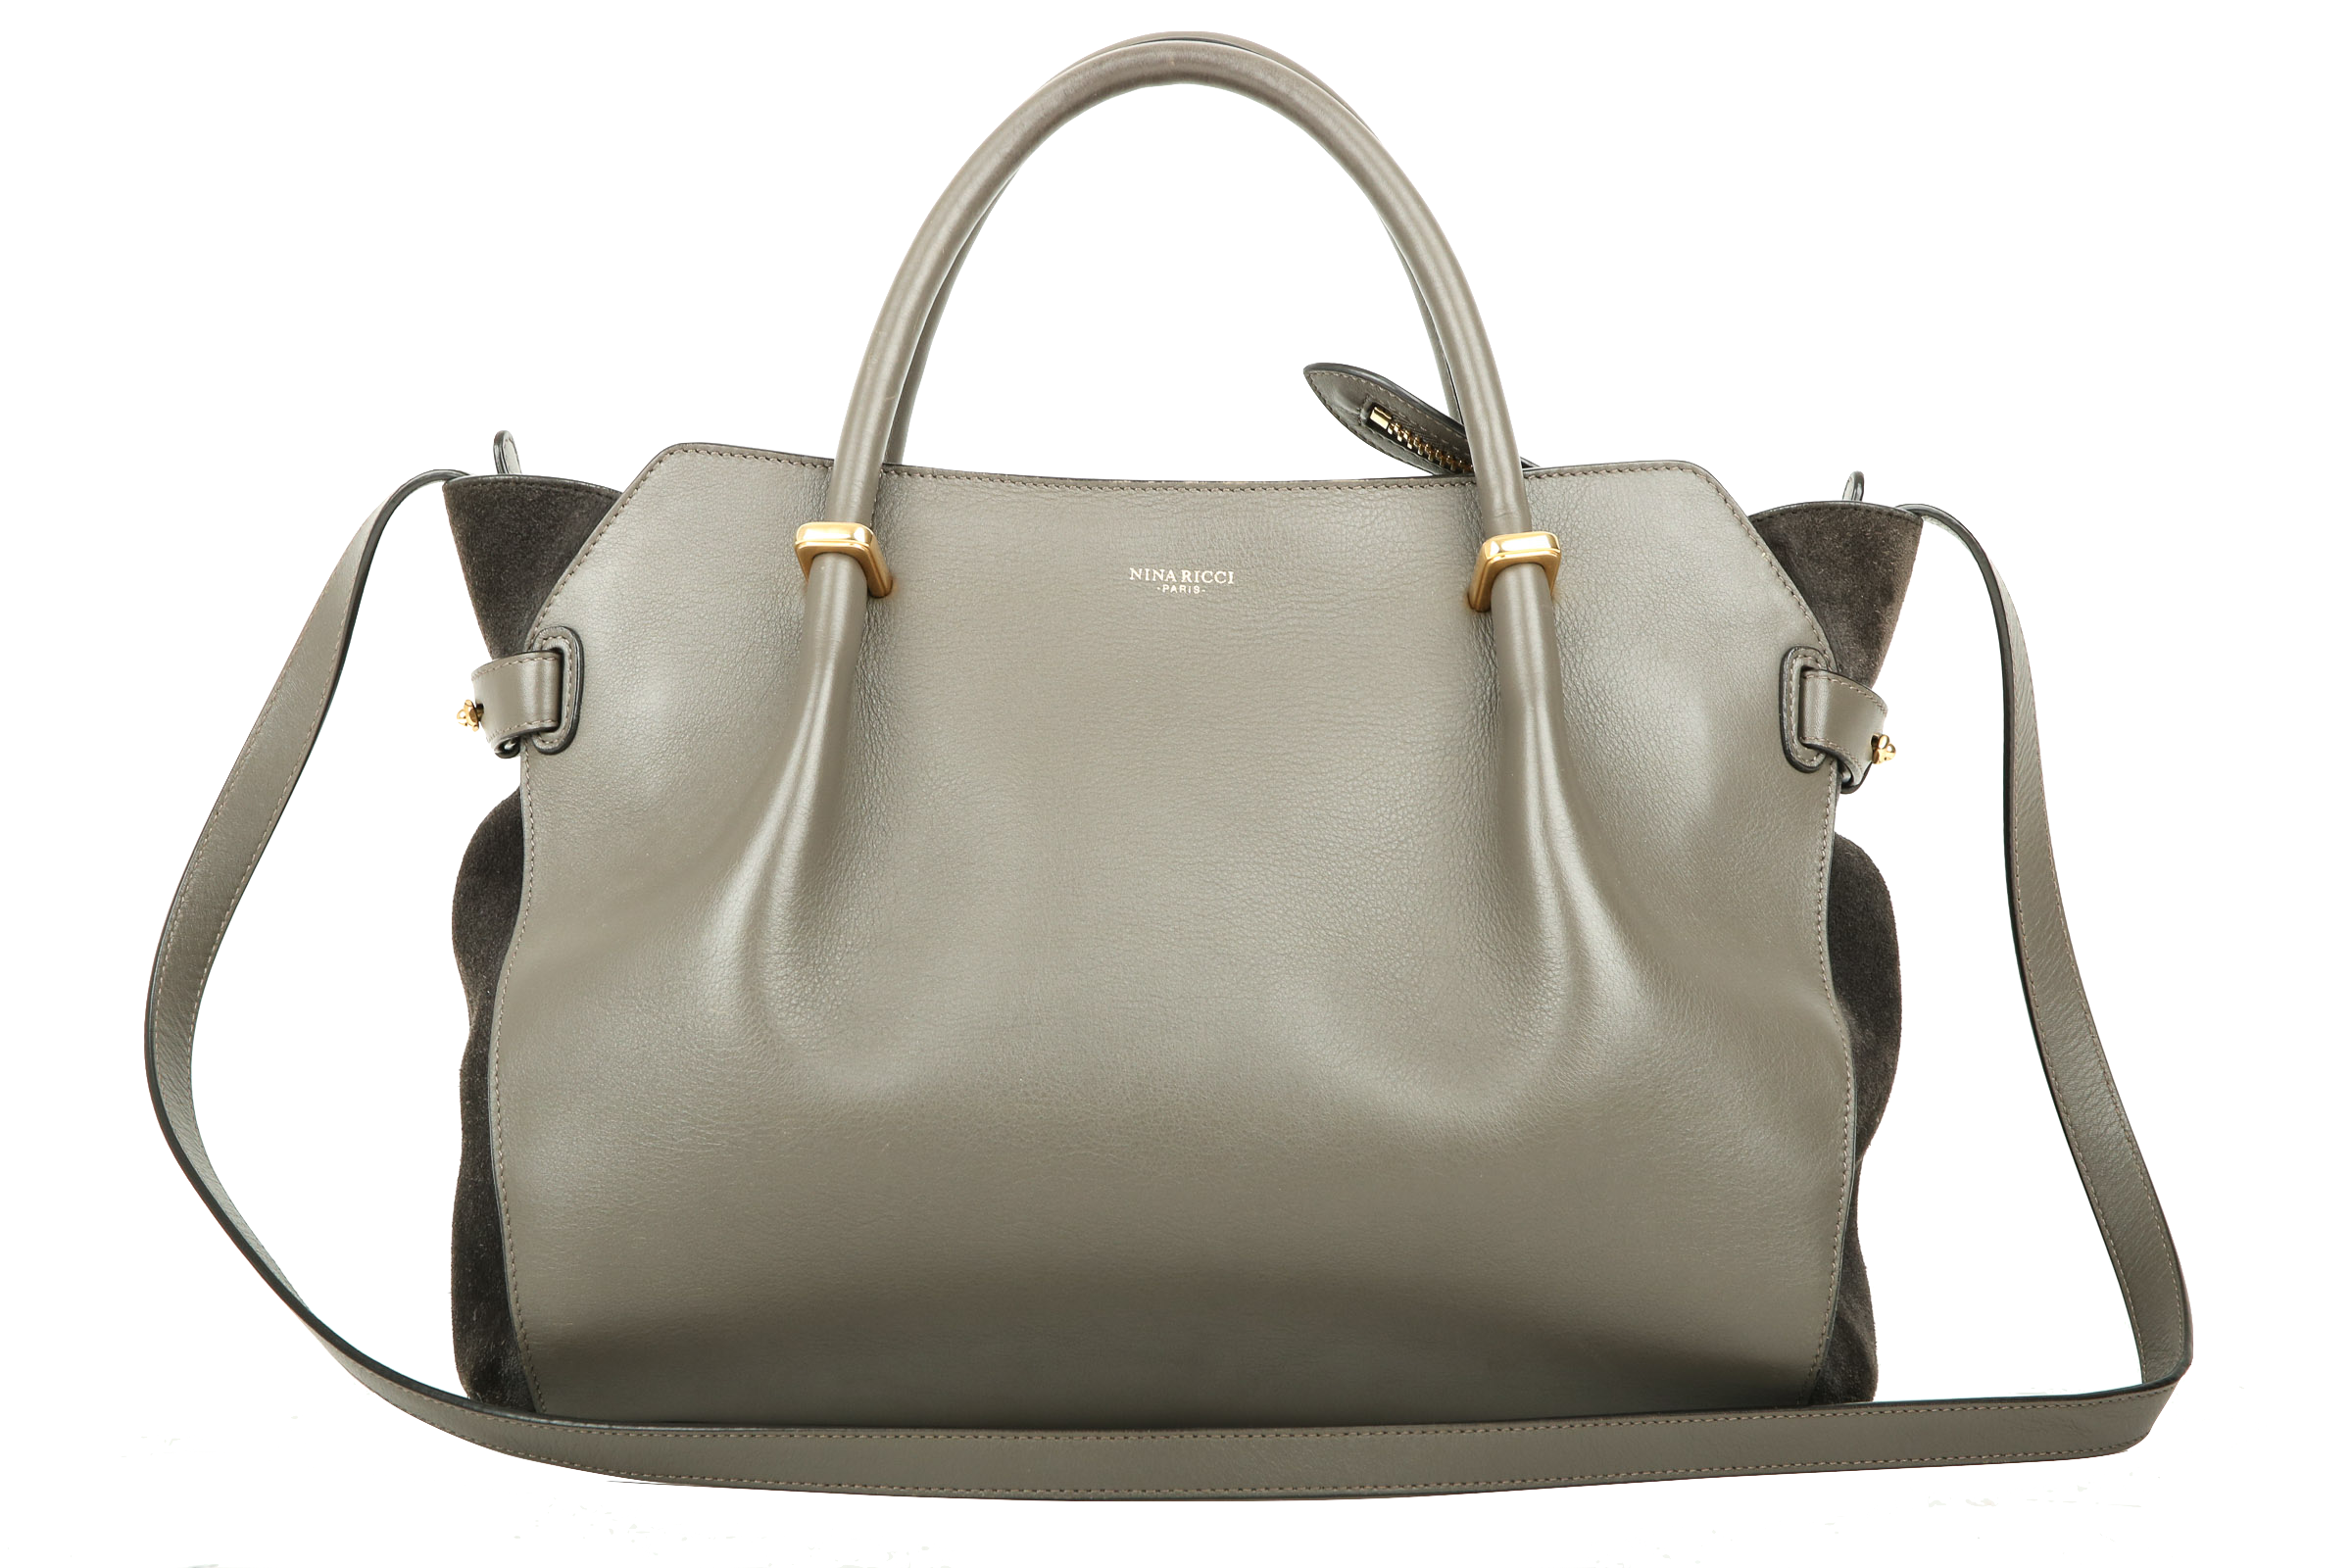 Nina Ricci Handbags & Accessories | Luxussachen.com